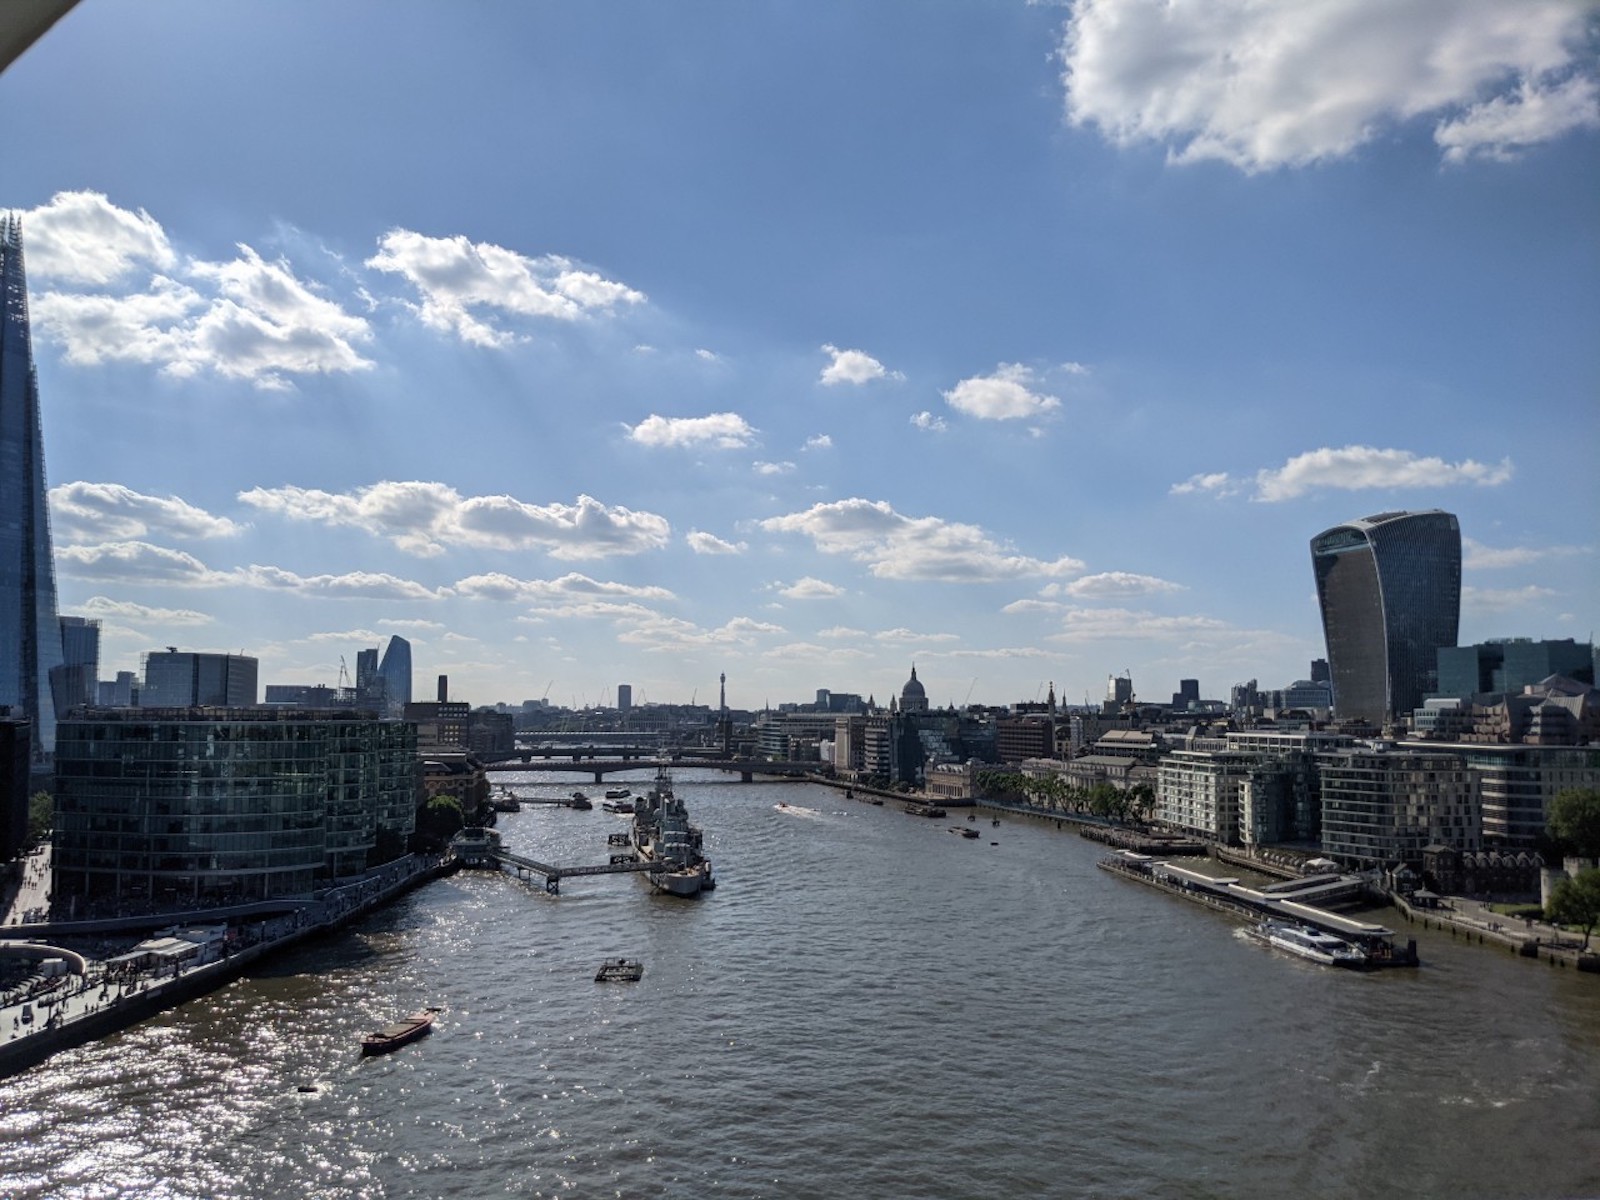 London Tower bridge view